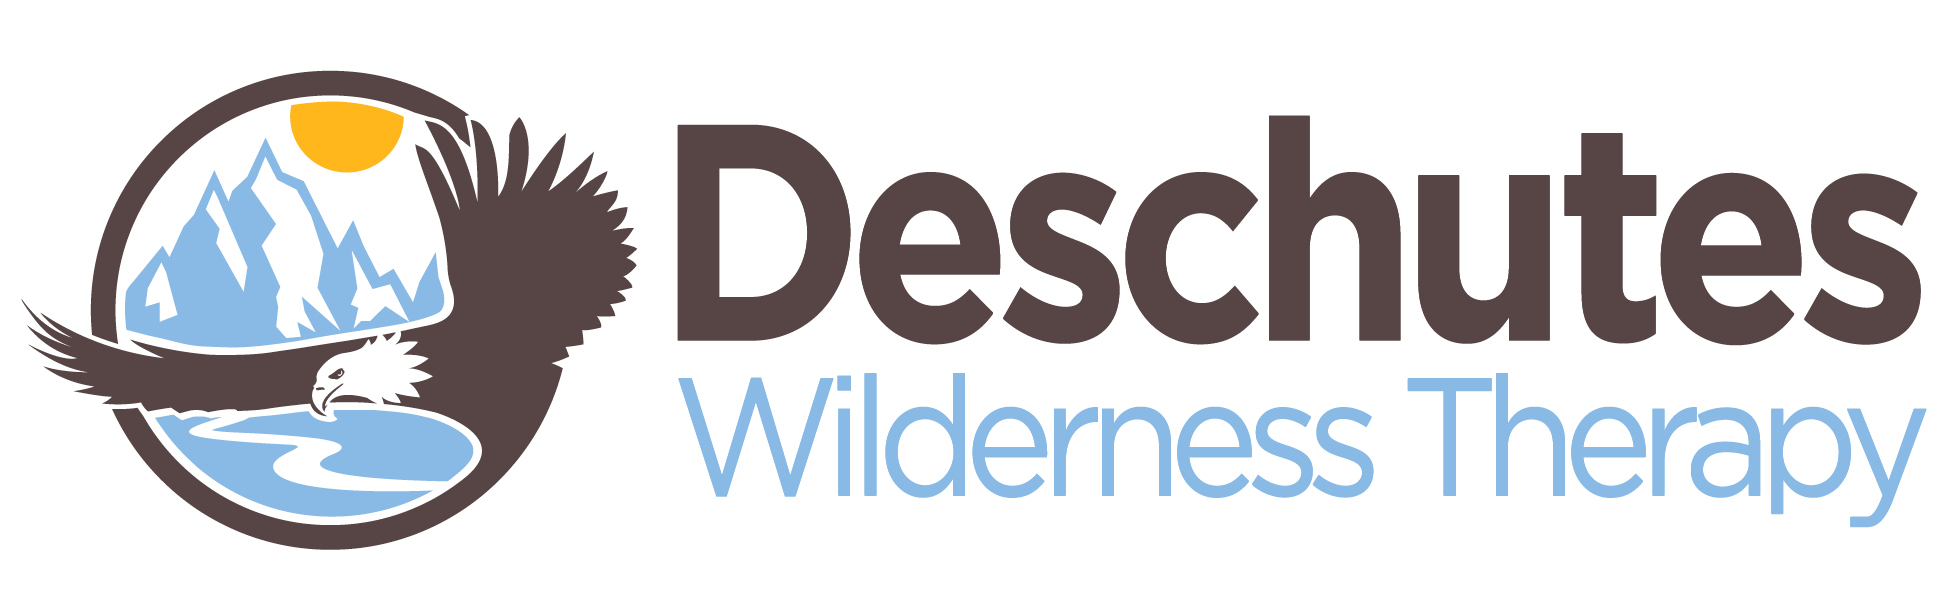 Deschutes Wilderness Therapy Company Logo